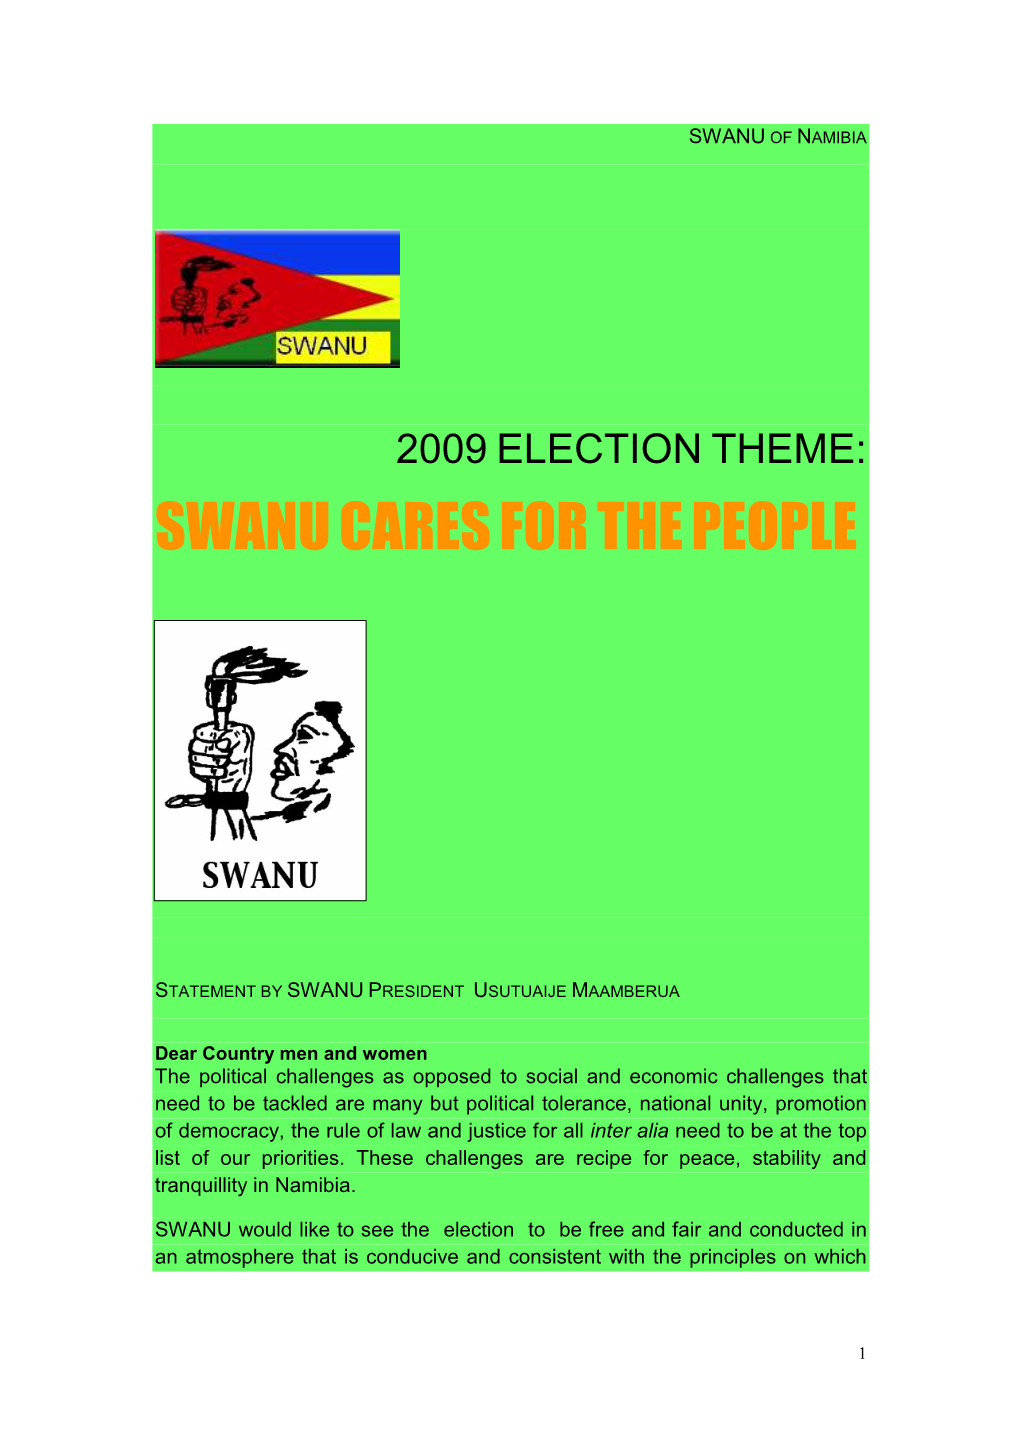 SWANU Manifesto 1